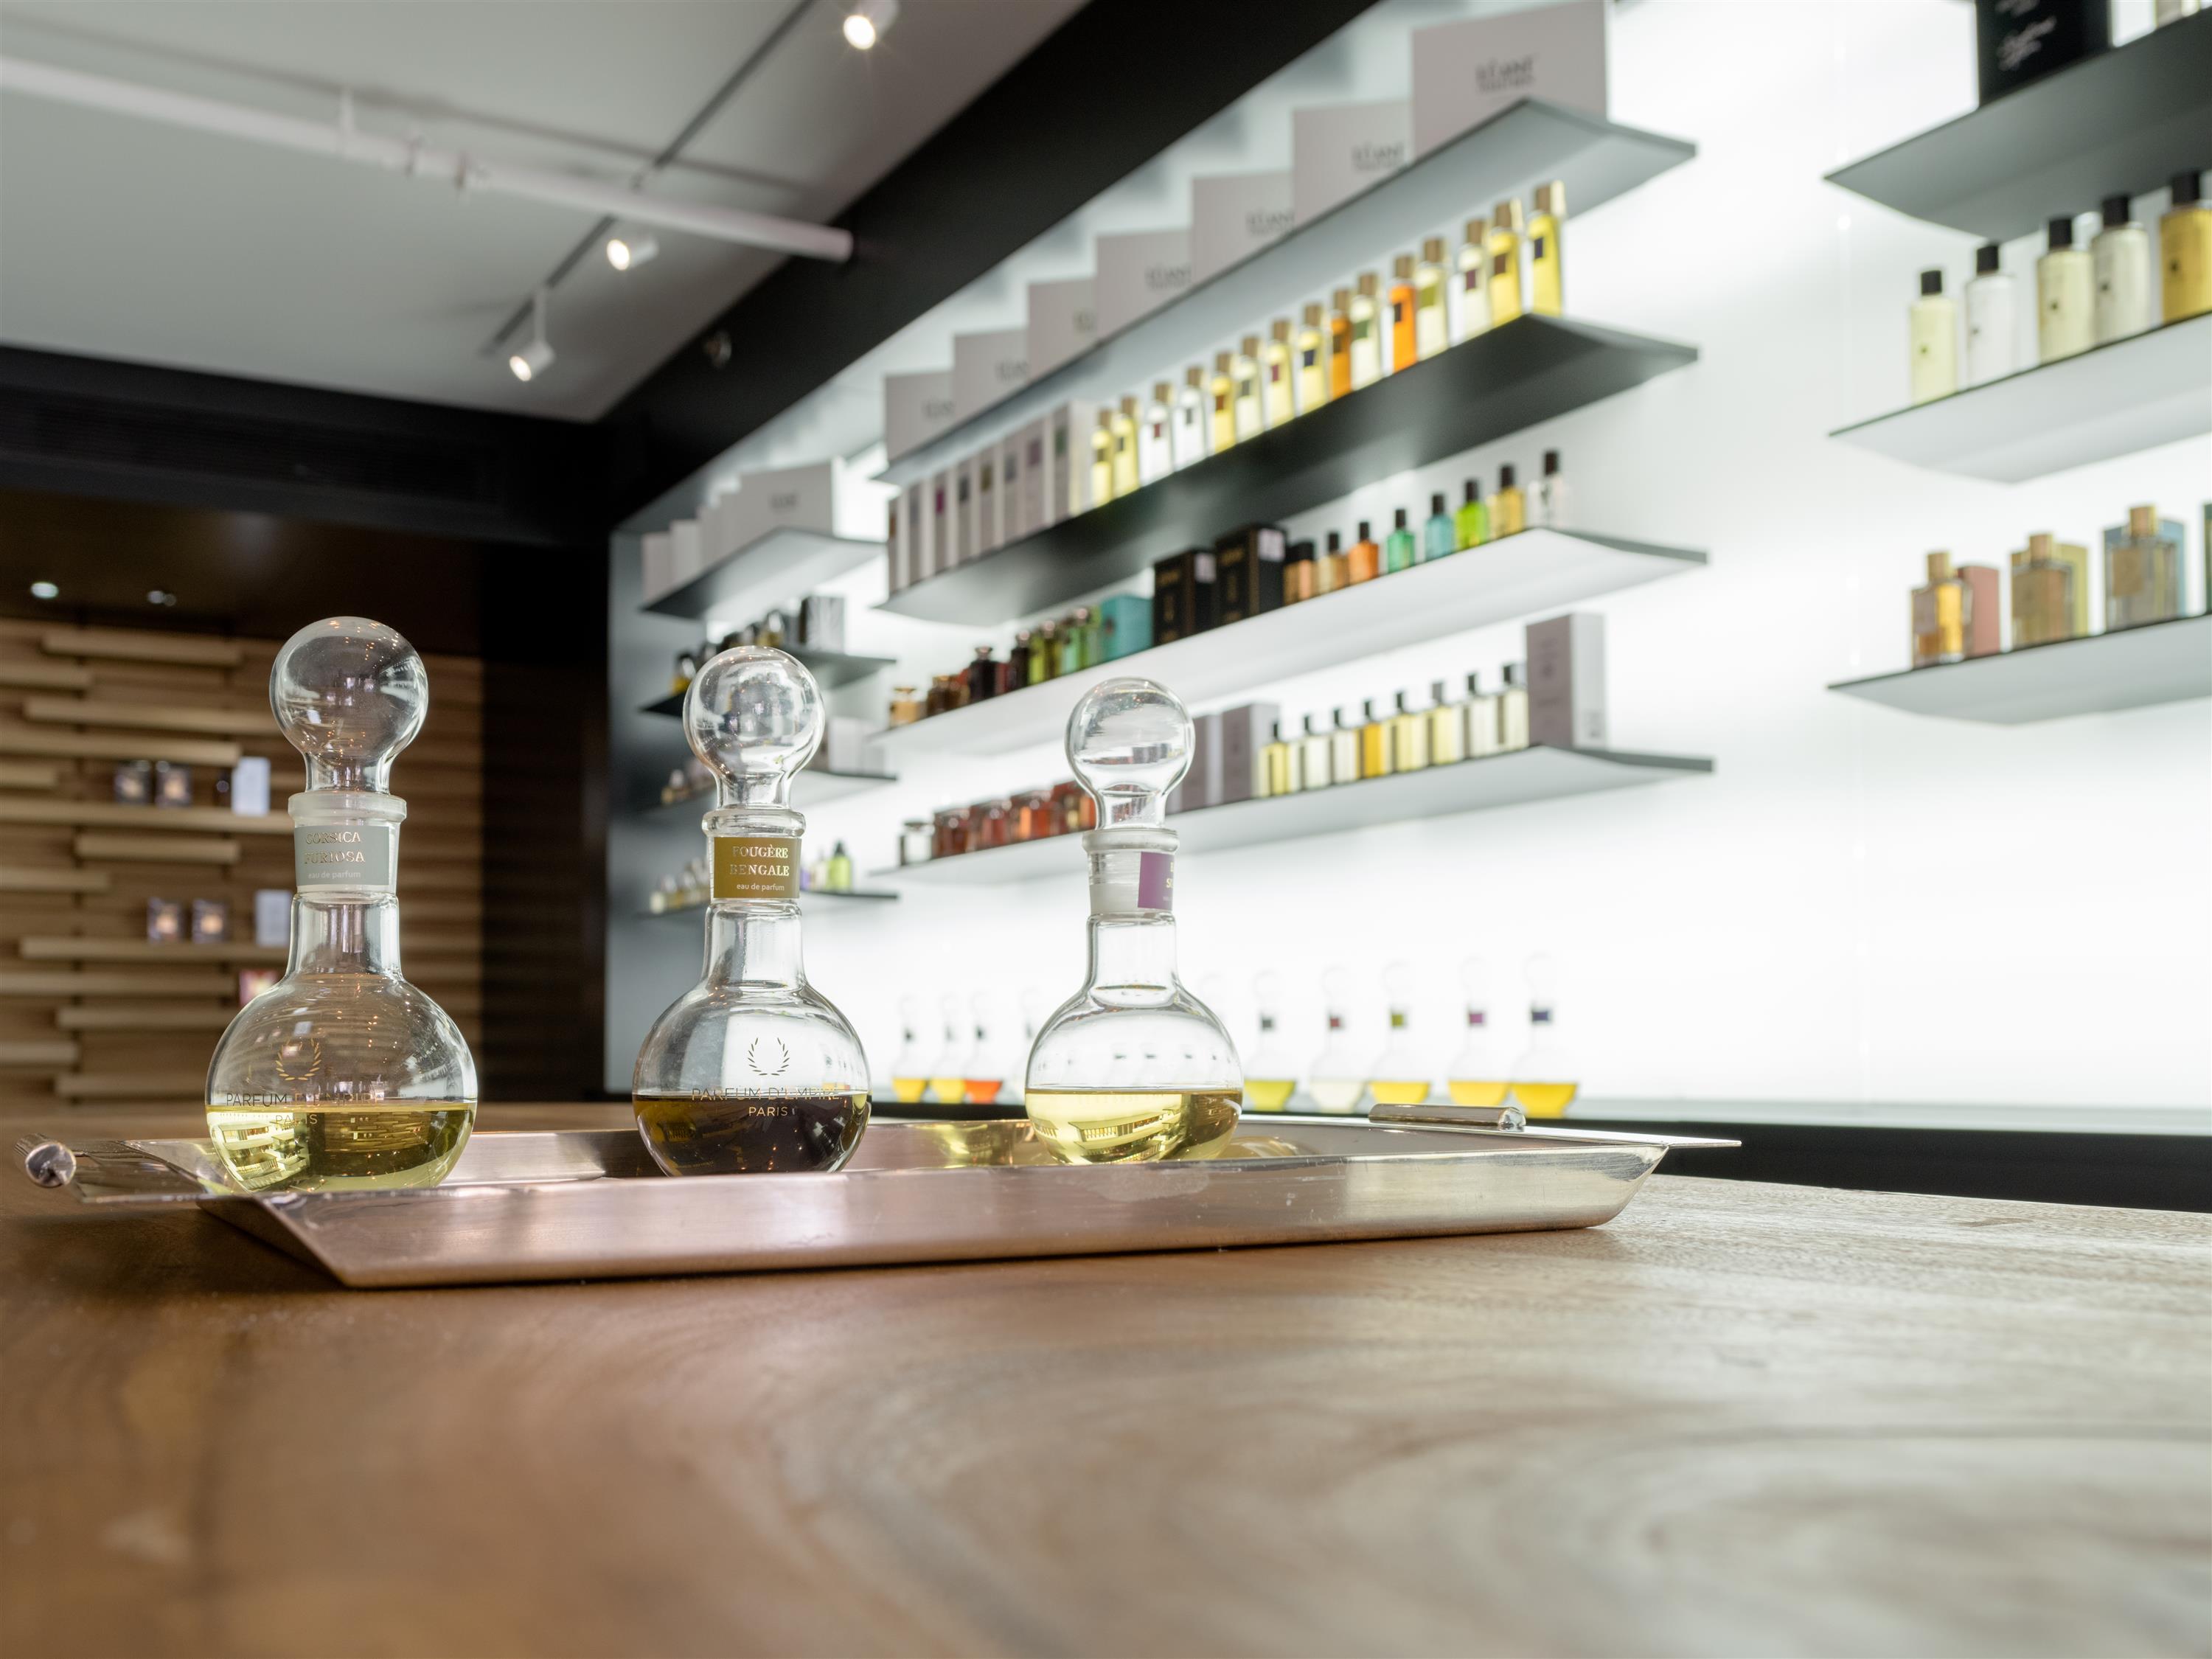 Oткрытие бутика нишевой парфюмерии “INDIVIDUAL Cabinet de parfums”